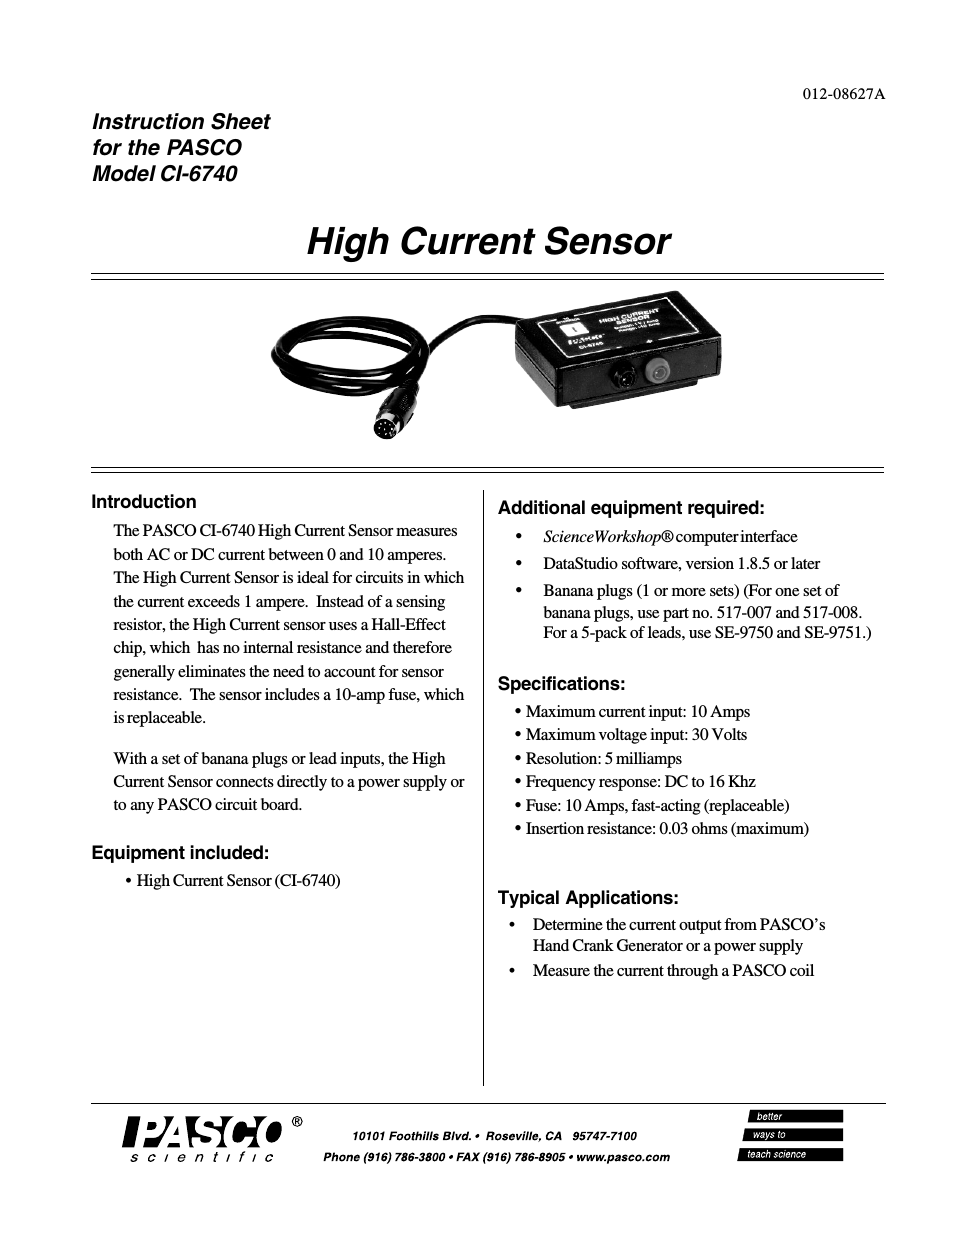 CI-6740 High Current Sensor